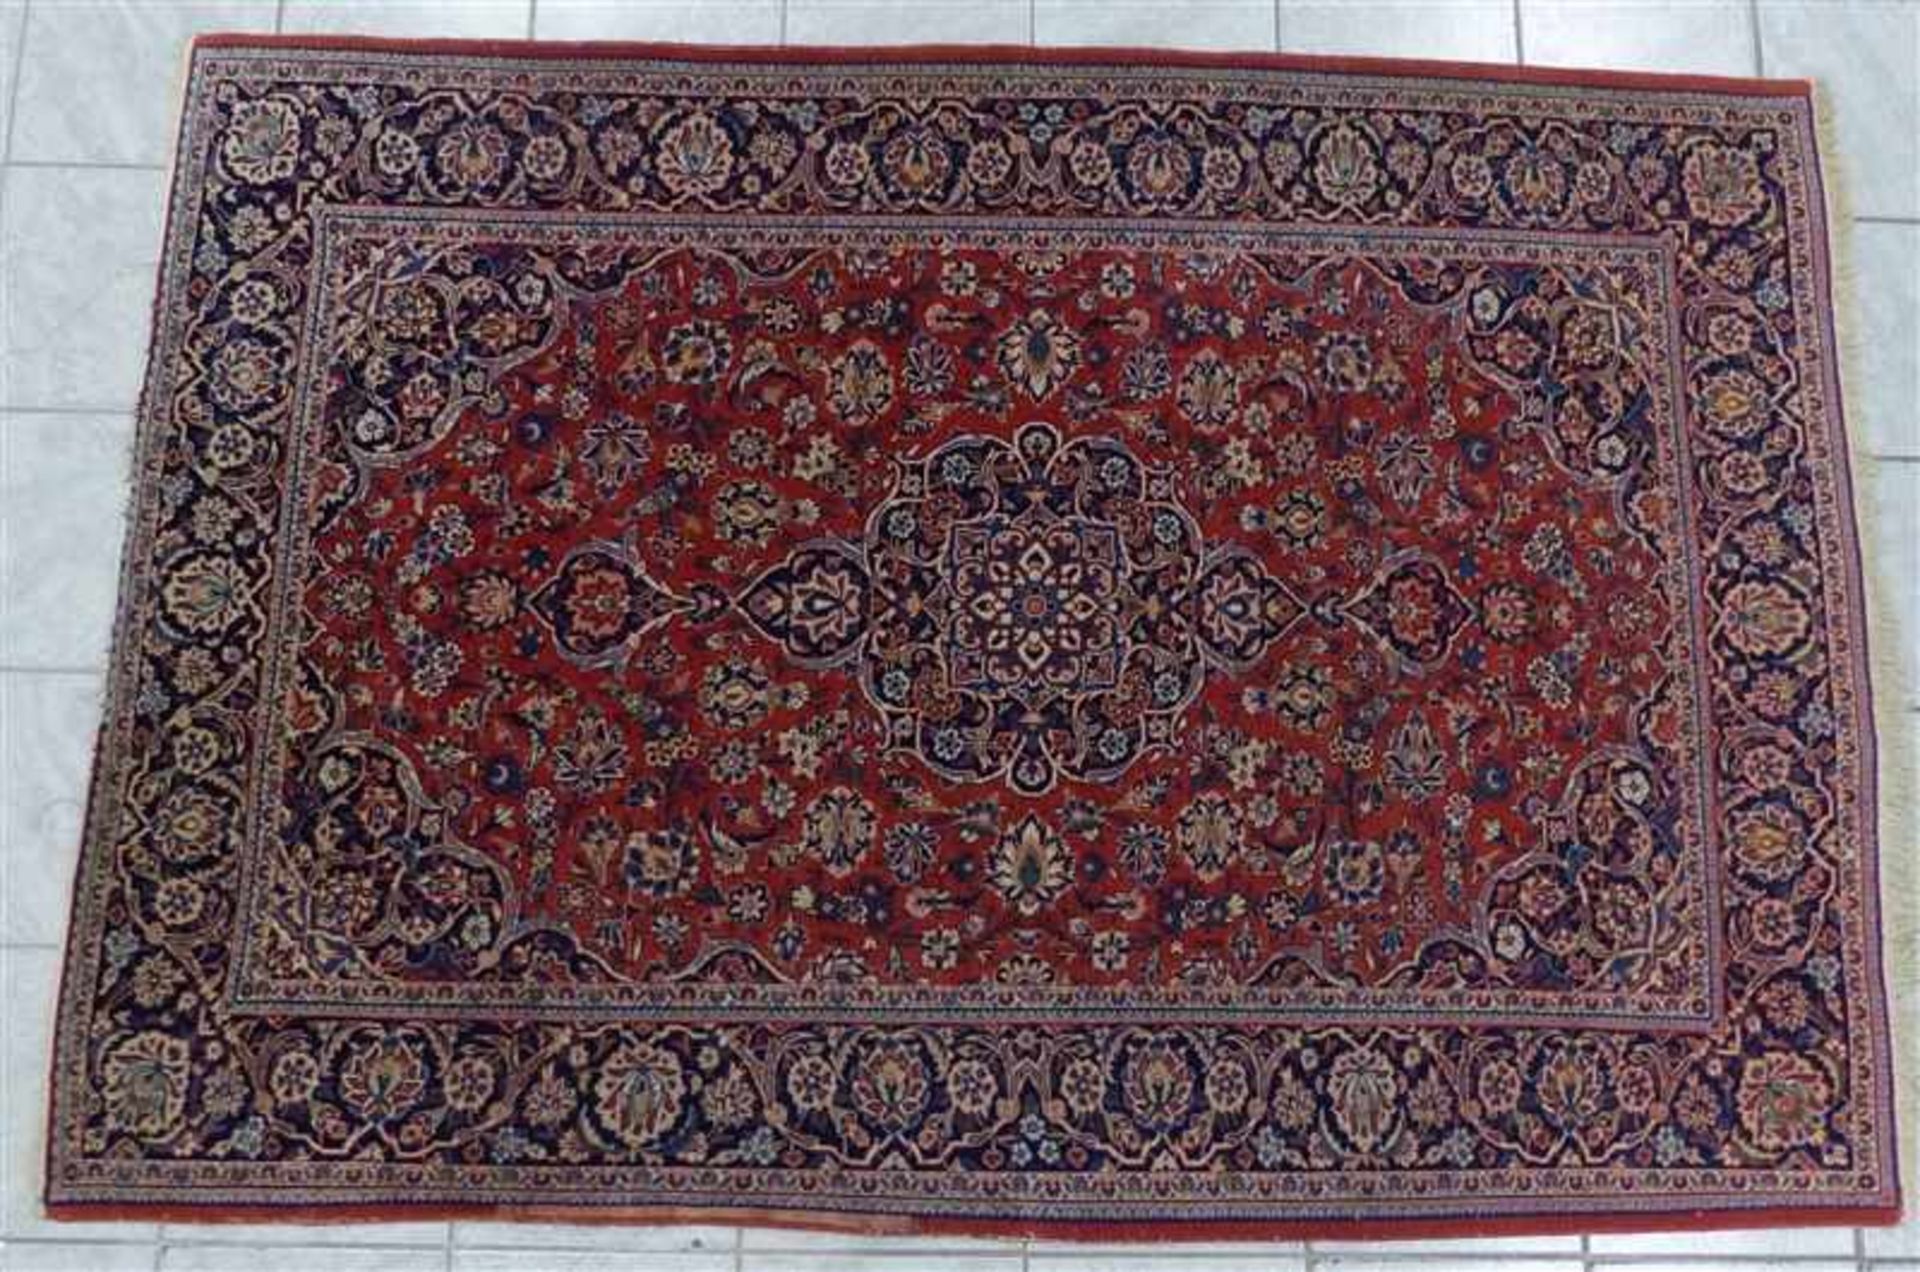 Keshan Brückeblau-rot grundig, florares Muster, Mittelmedaillon, Randbeschädigung, 205x140 cm,